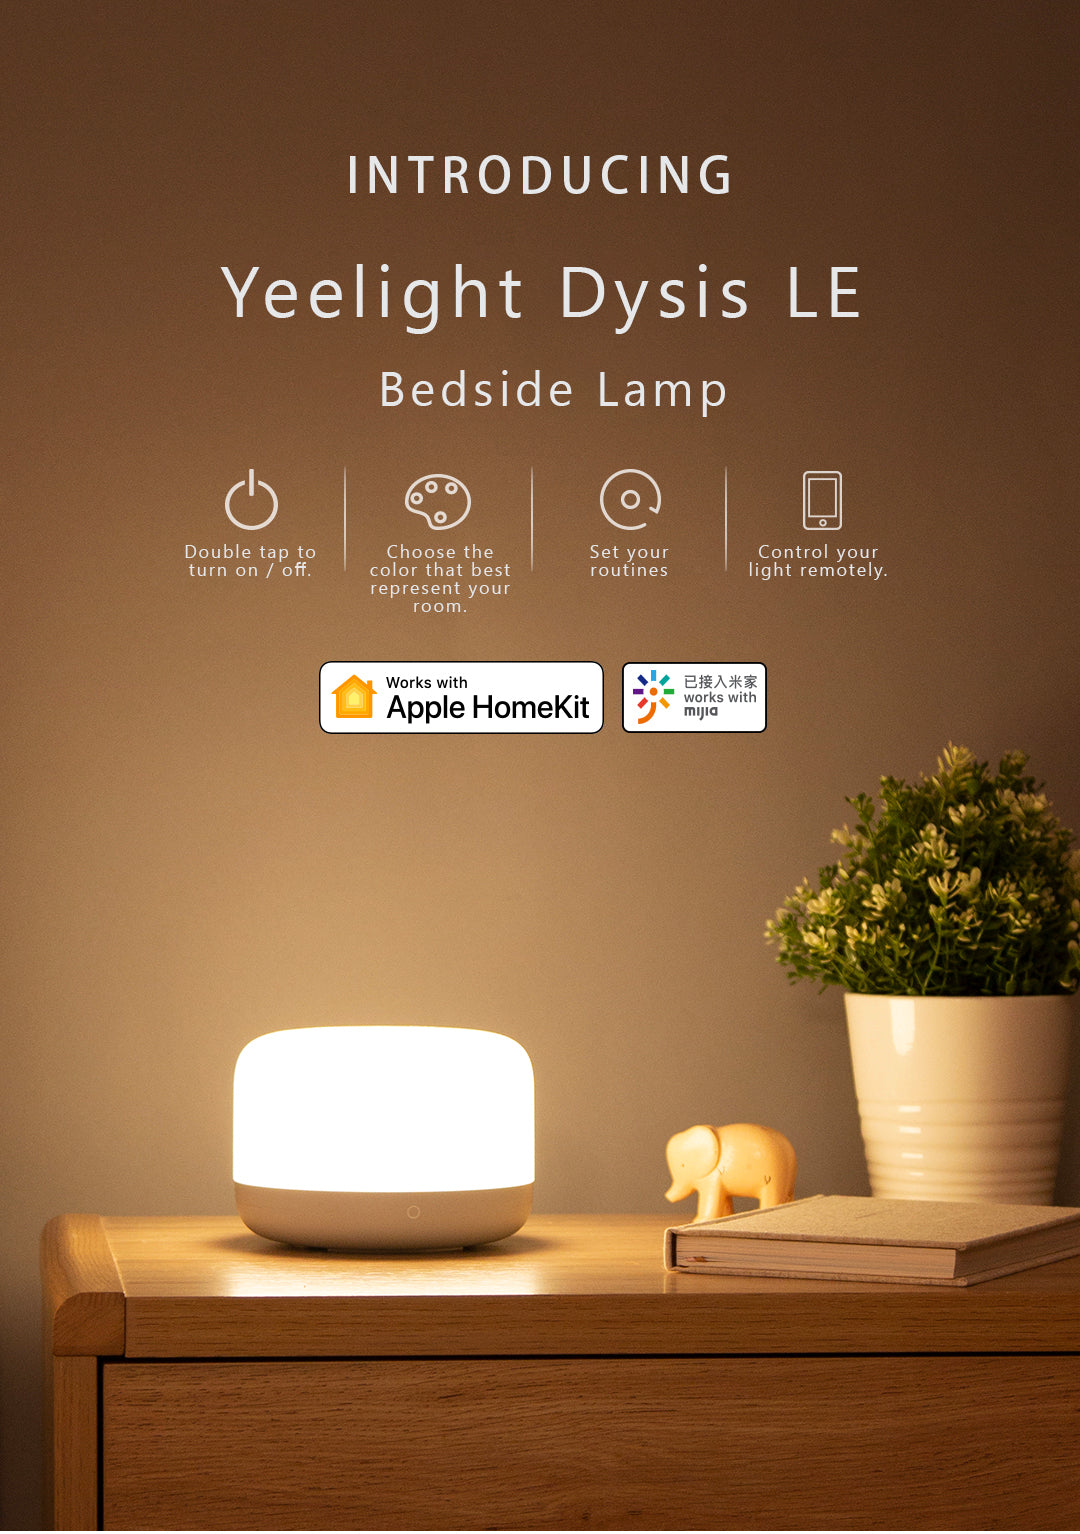 Yeelight Dysis D2 LED Bedside Lamp